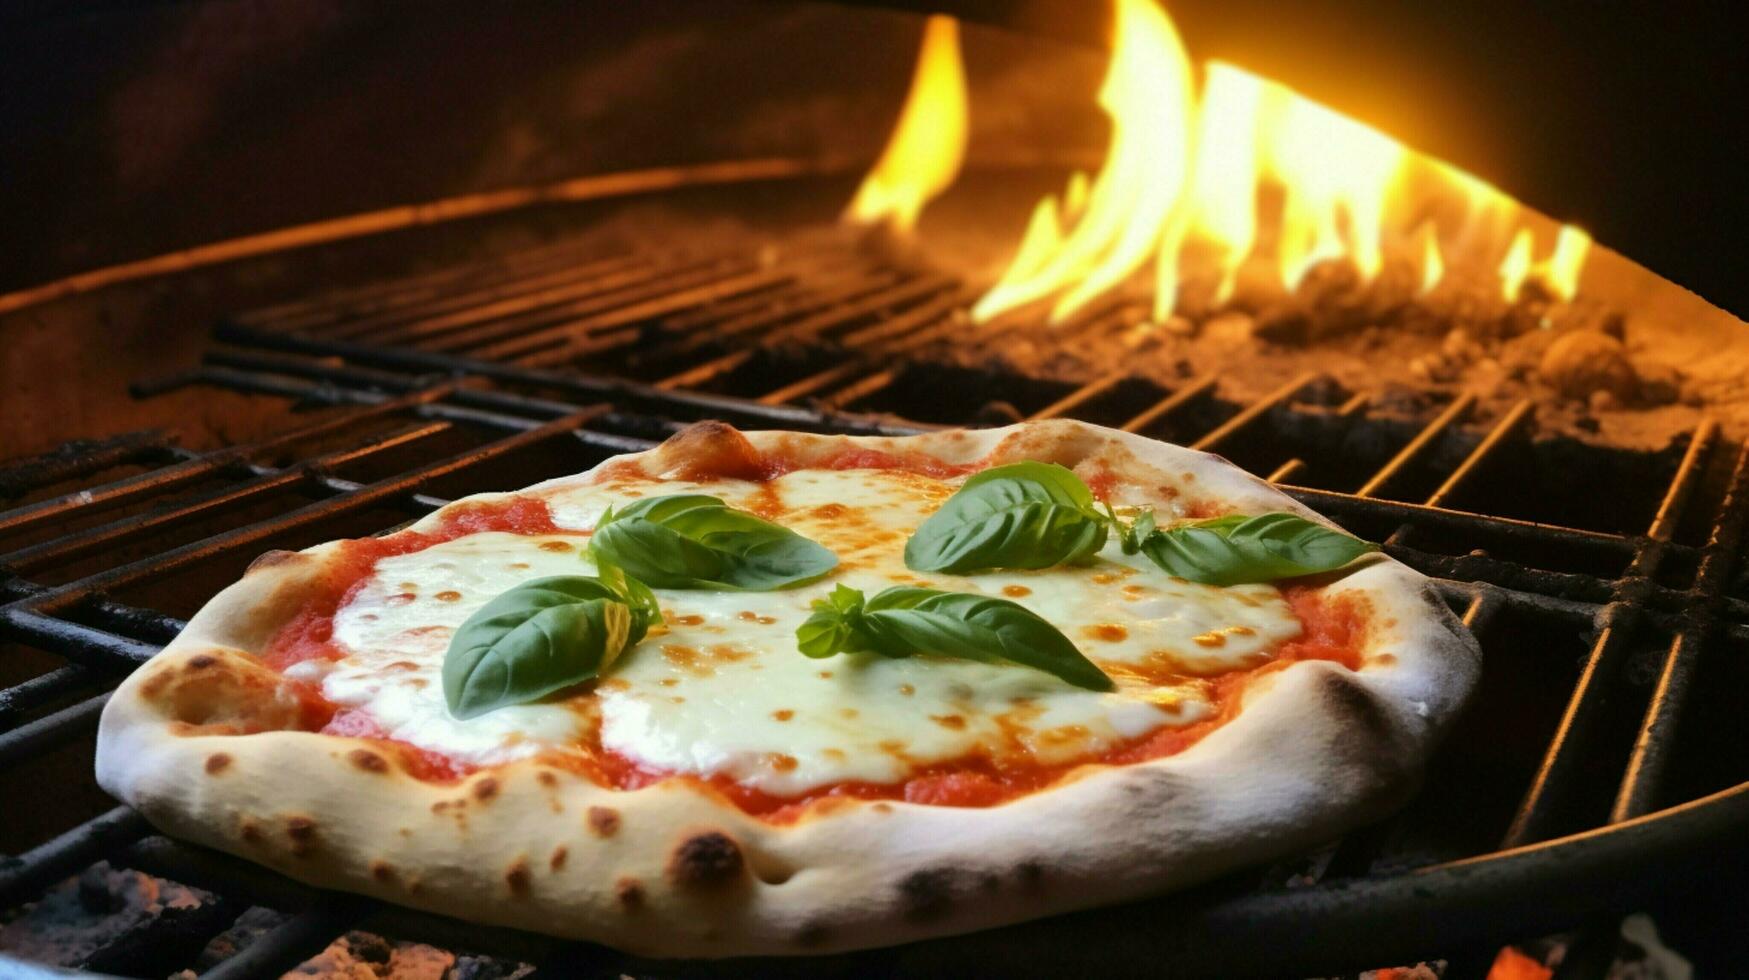 melting mozzarella on homemade pizza baked photo